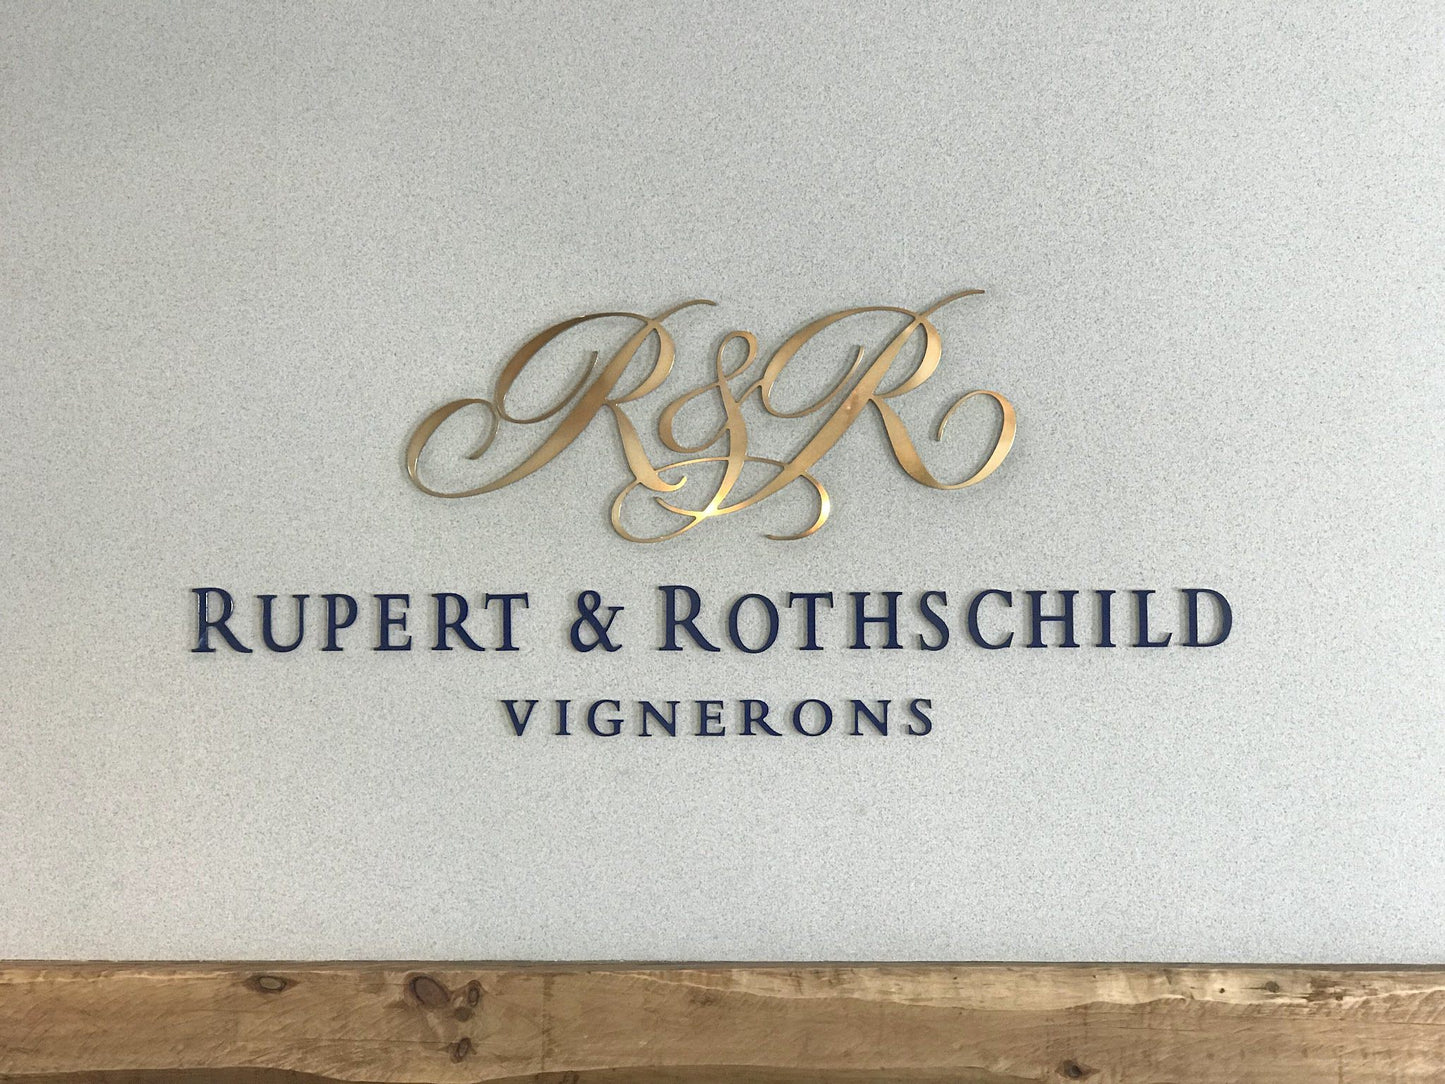  Rupert & Rothschild Vignerons